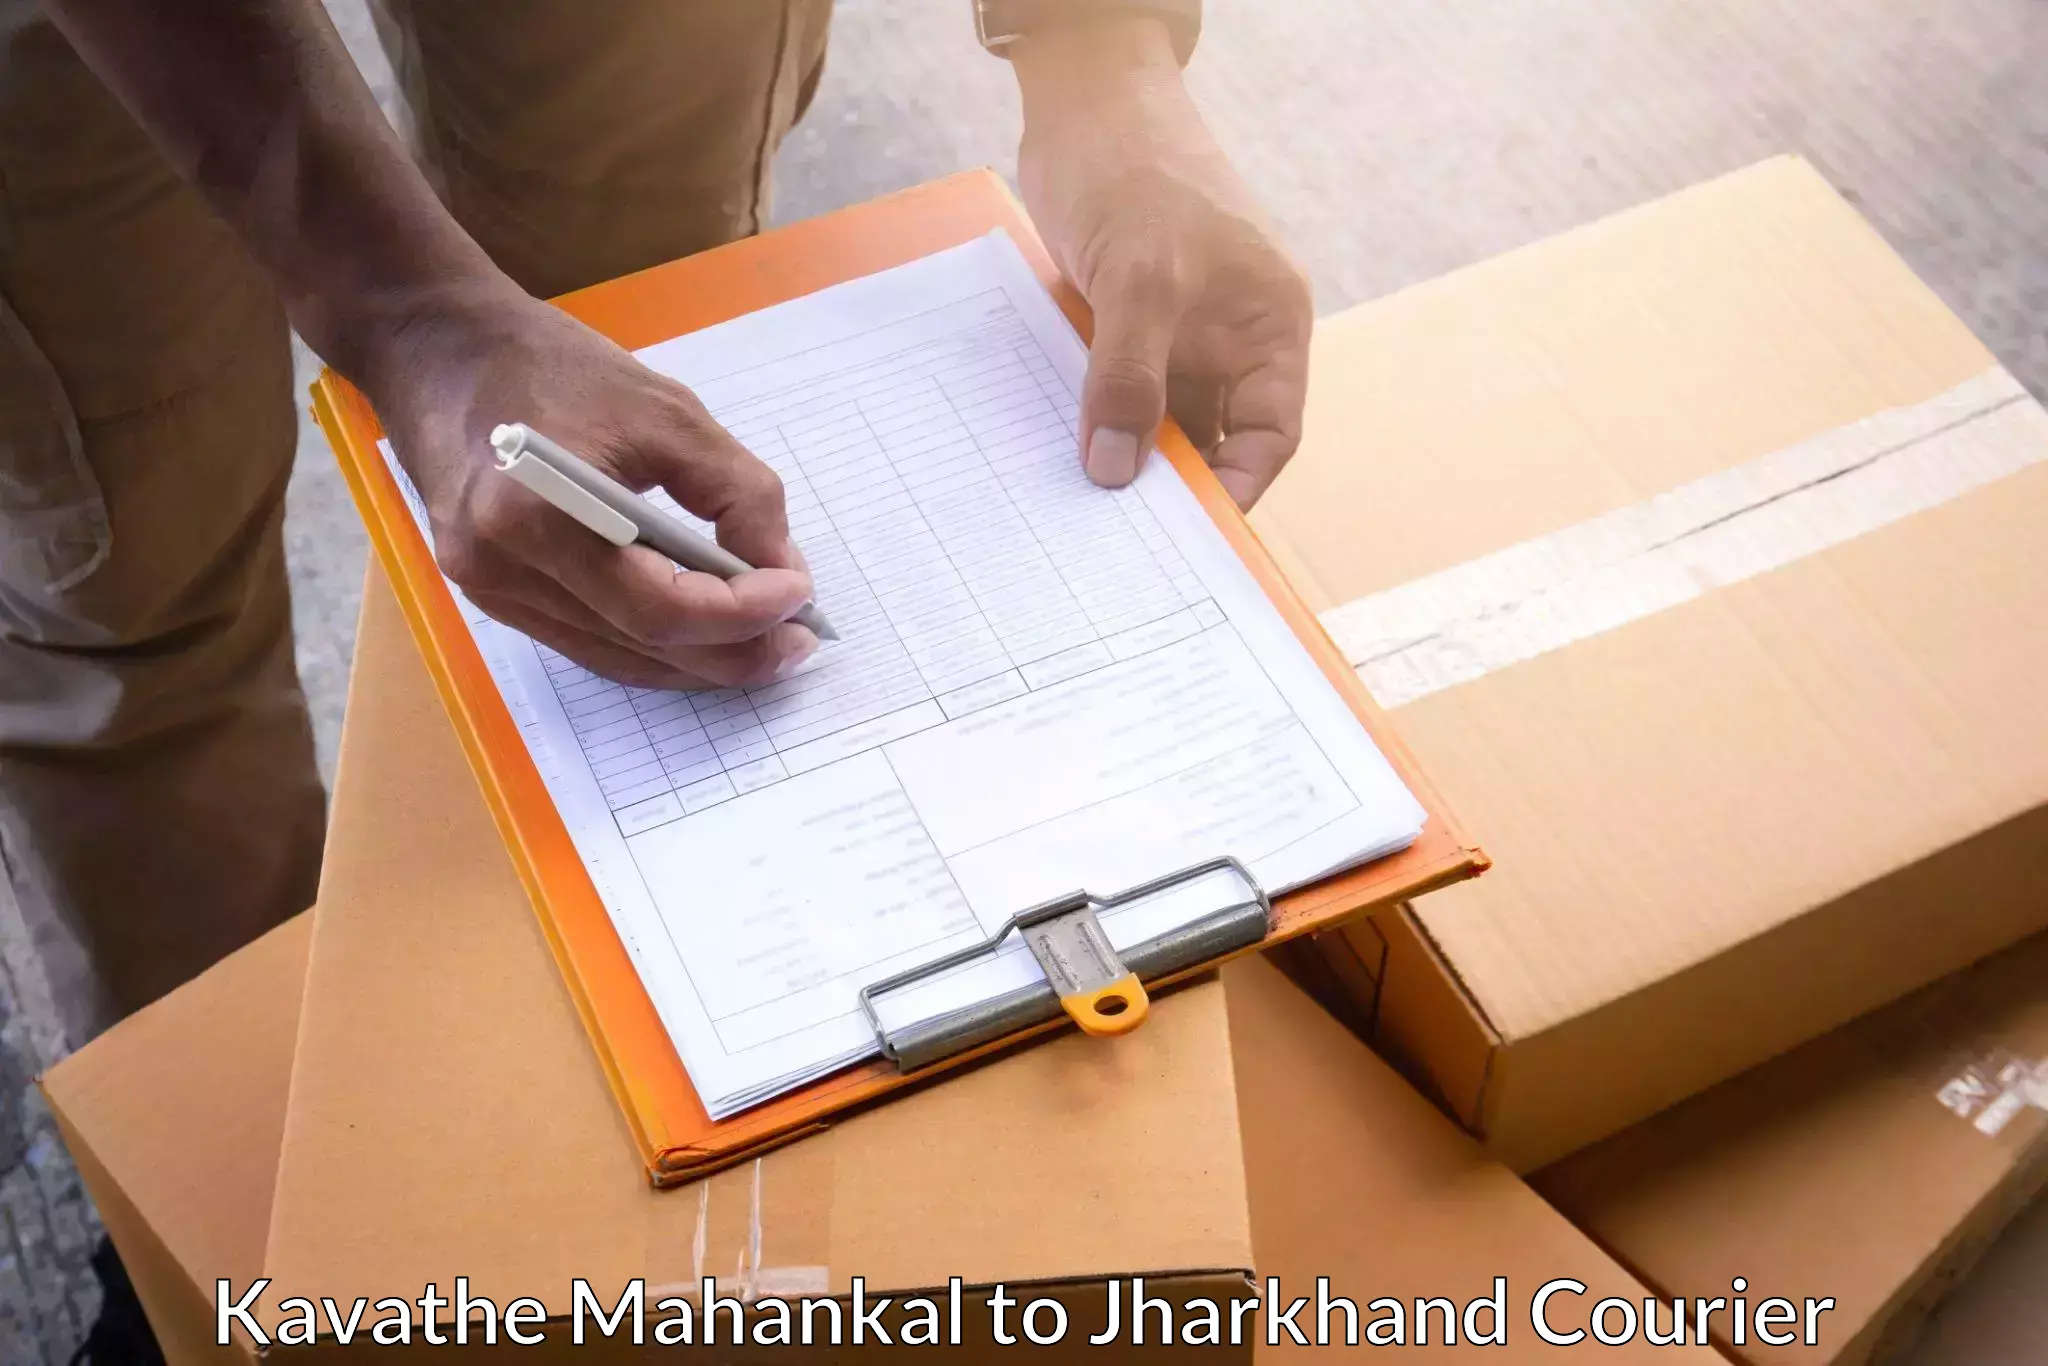 Reliable package handling Kavathe Mahankal to Lohardaga